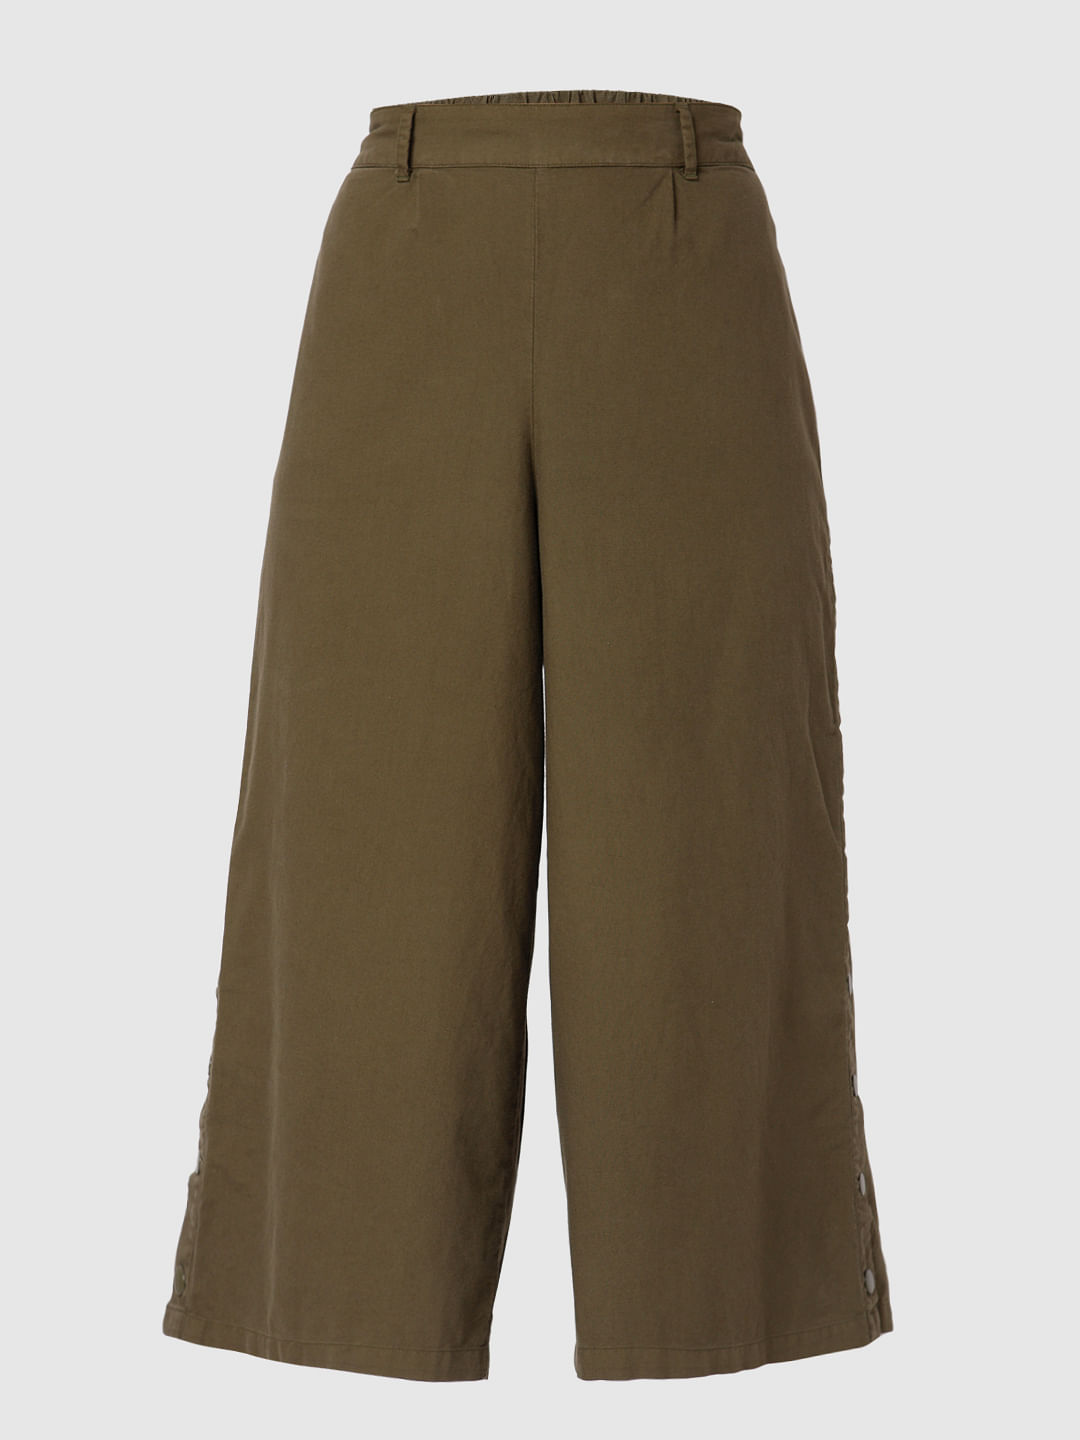 Buy Olive Green Linen WideLeg Formal Trousers Online  FableStreet